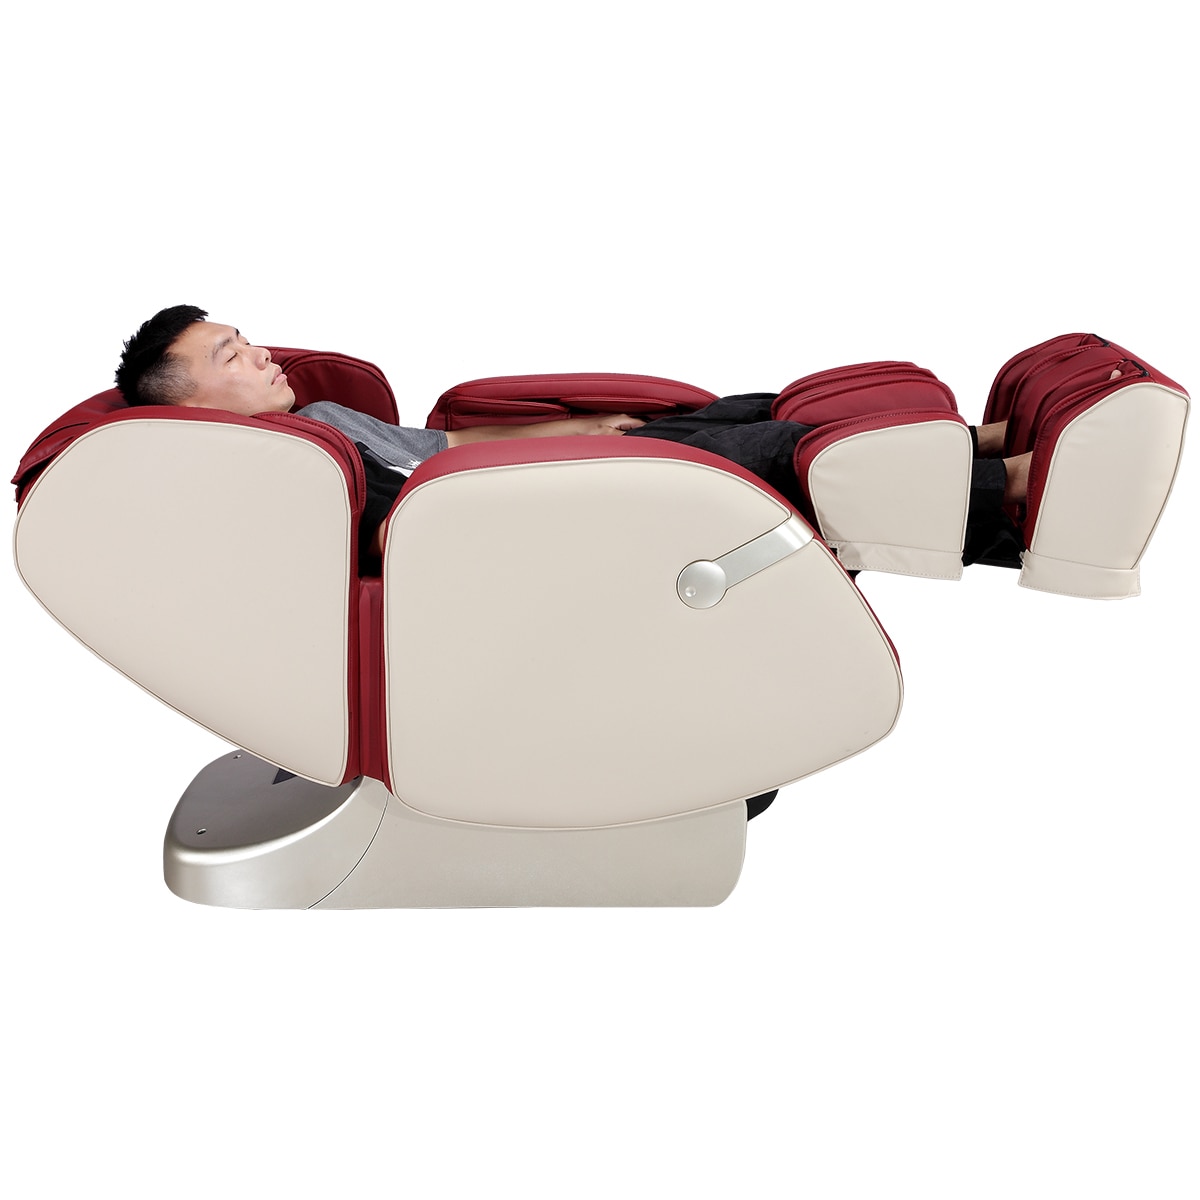 Masseuse Massage Chairs Restore+ Massage Chair Red | Costco Australia